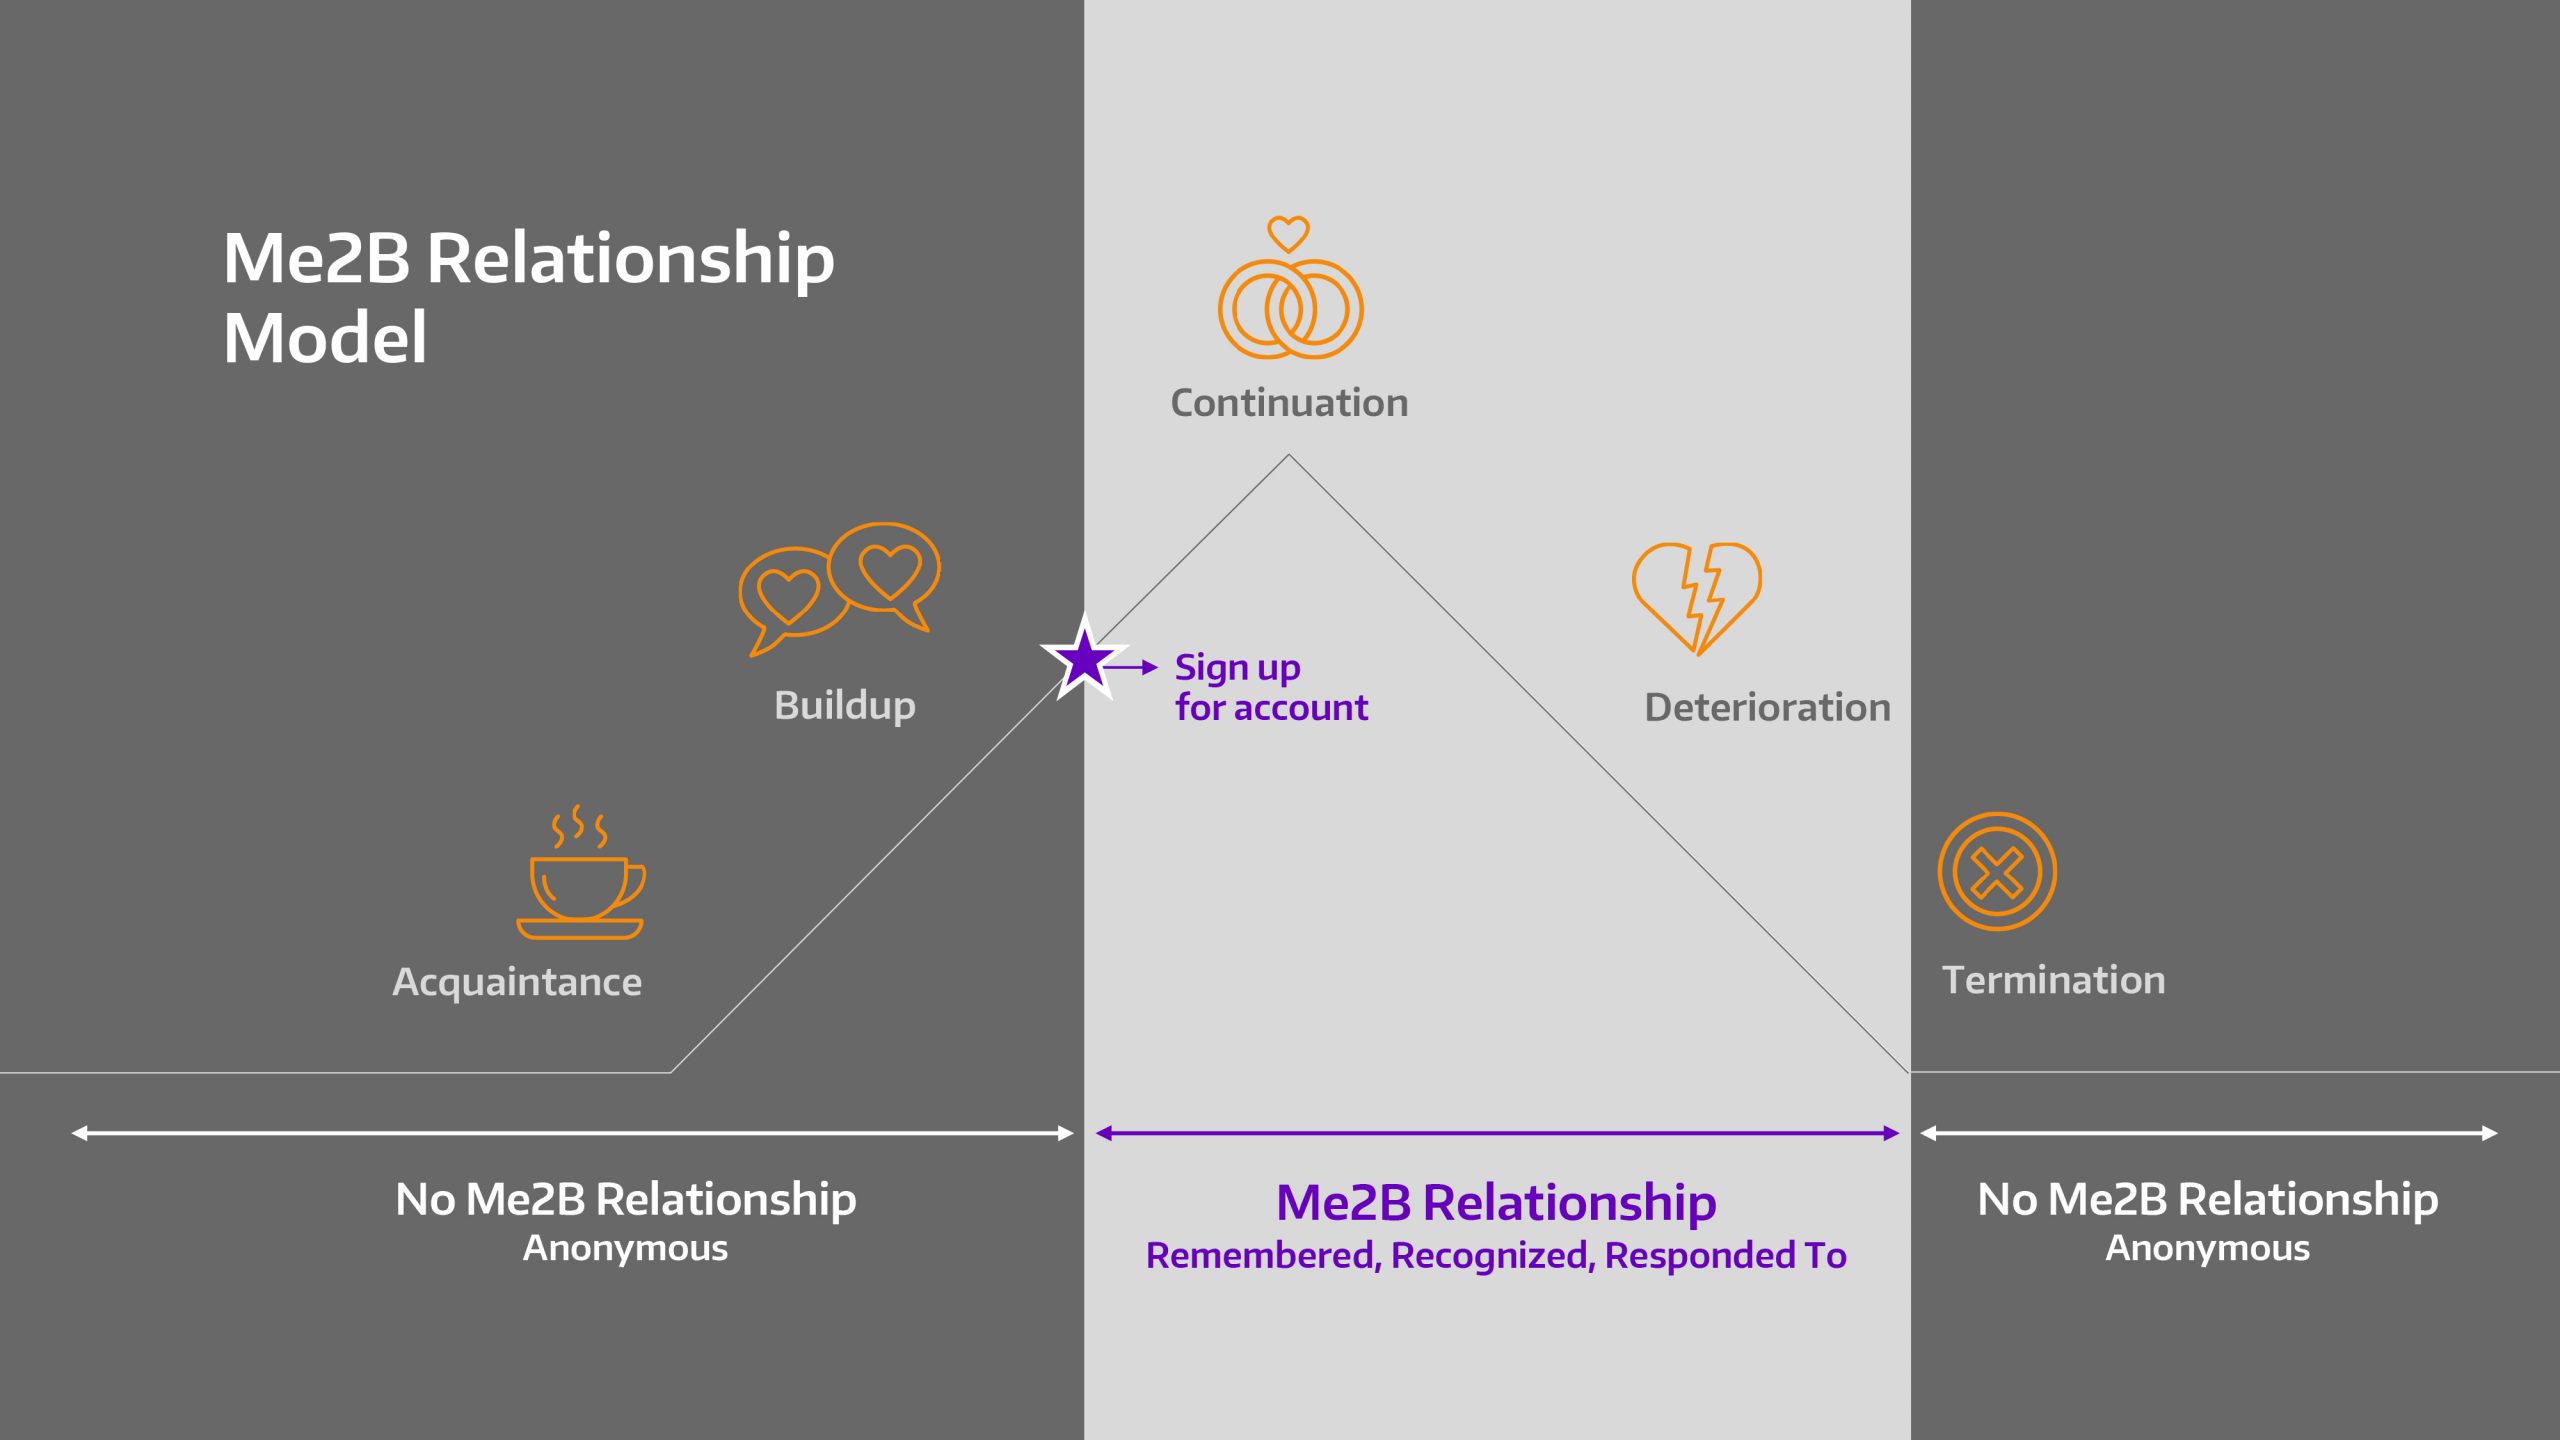 Figure 1 - Me2B Relationship Model